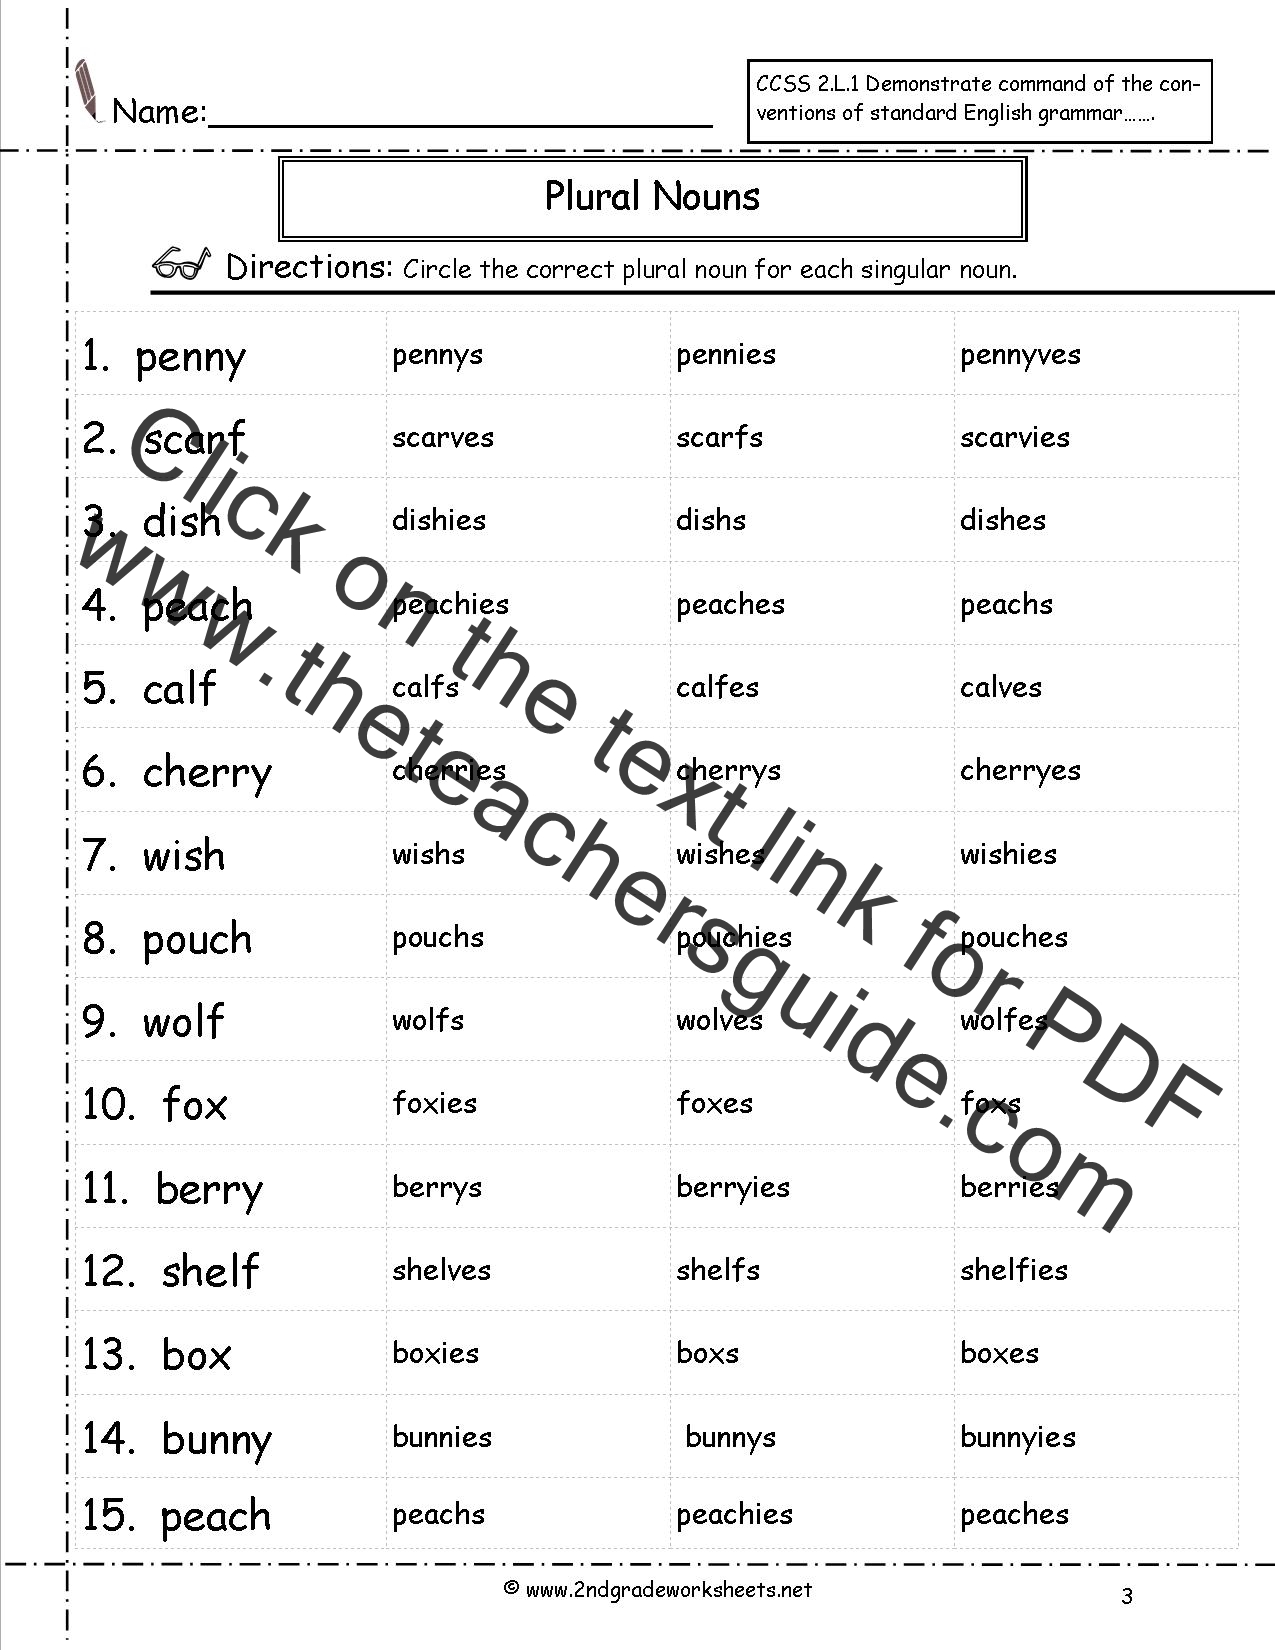 Reflexive Pronouns in Context Worksheet